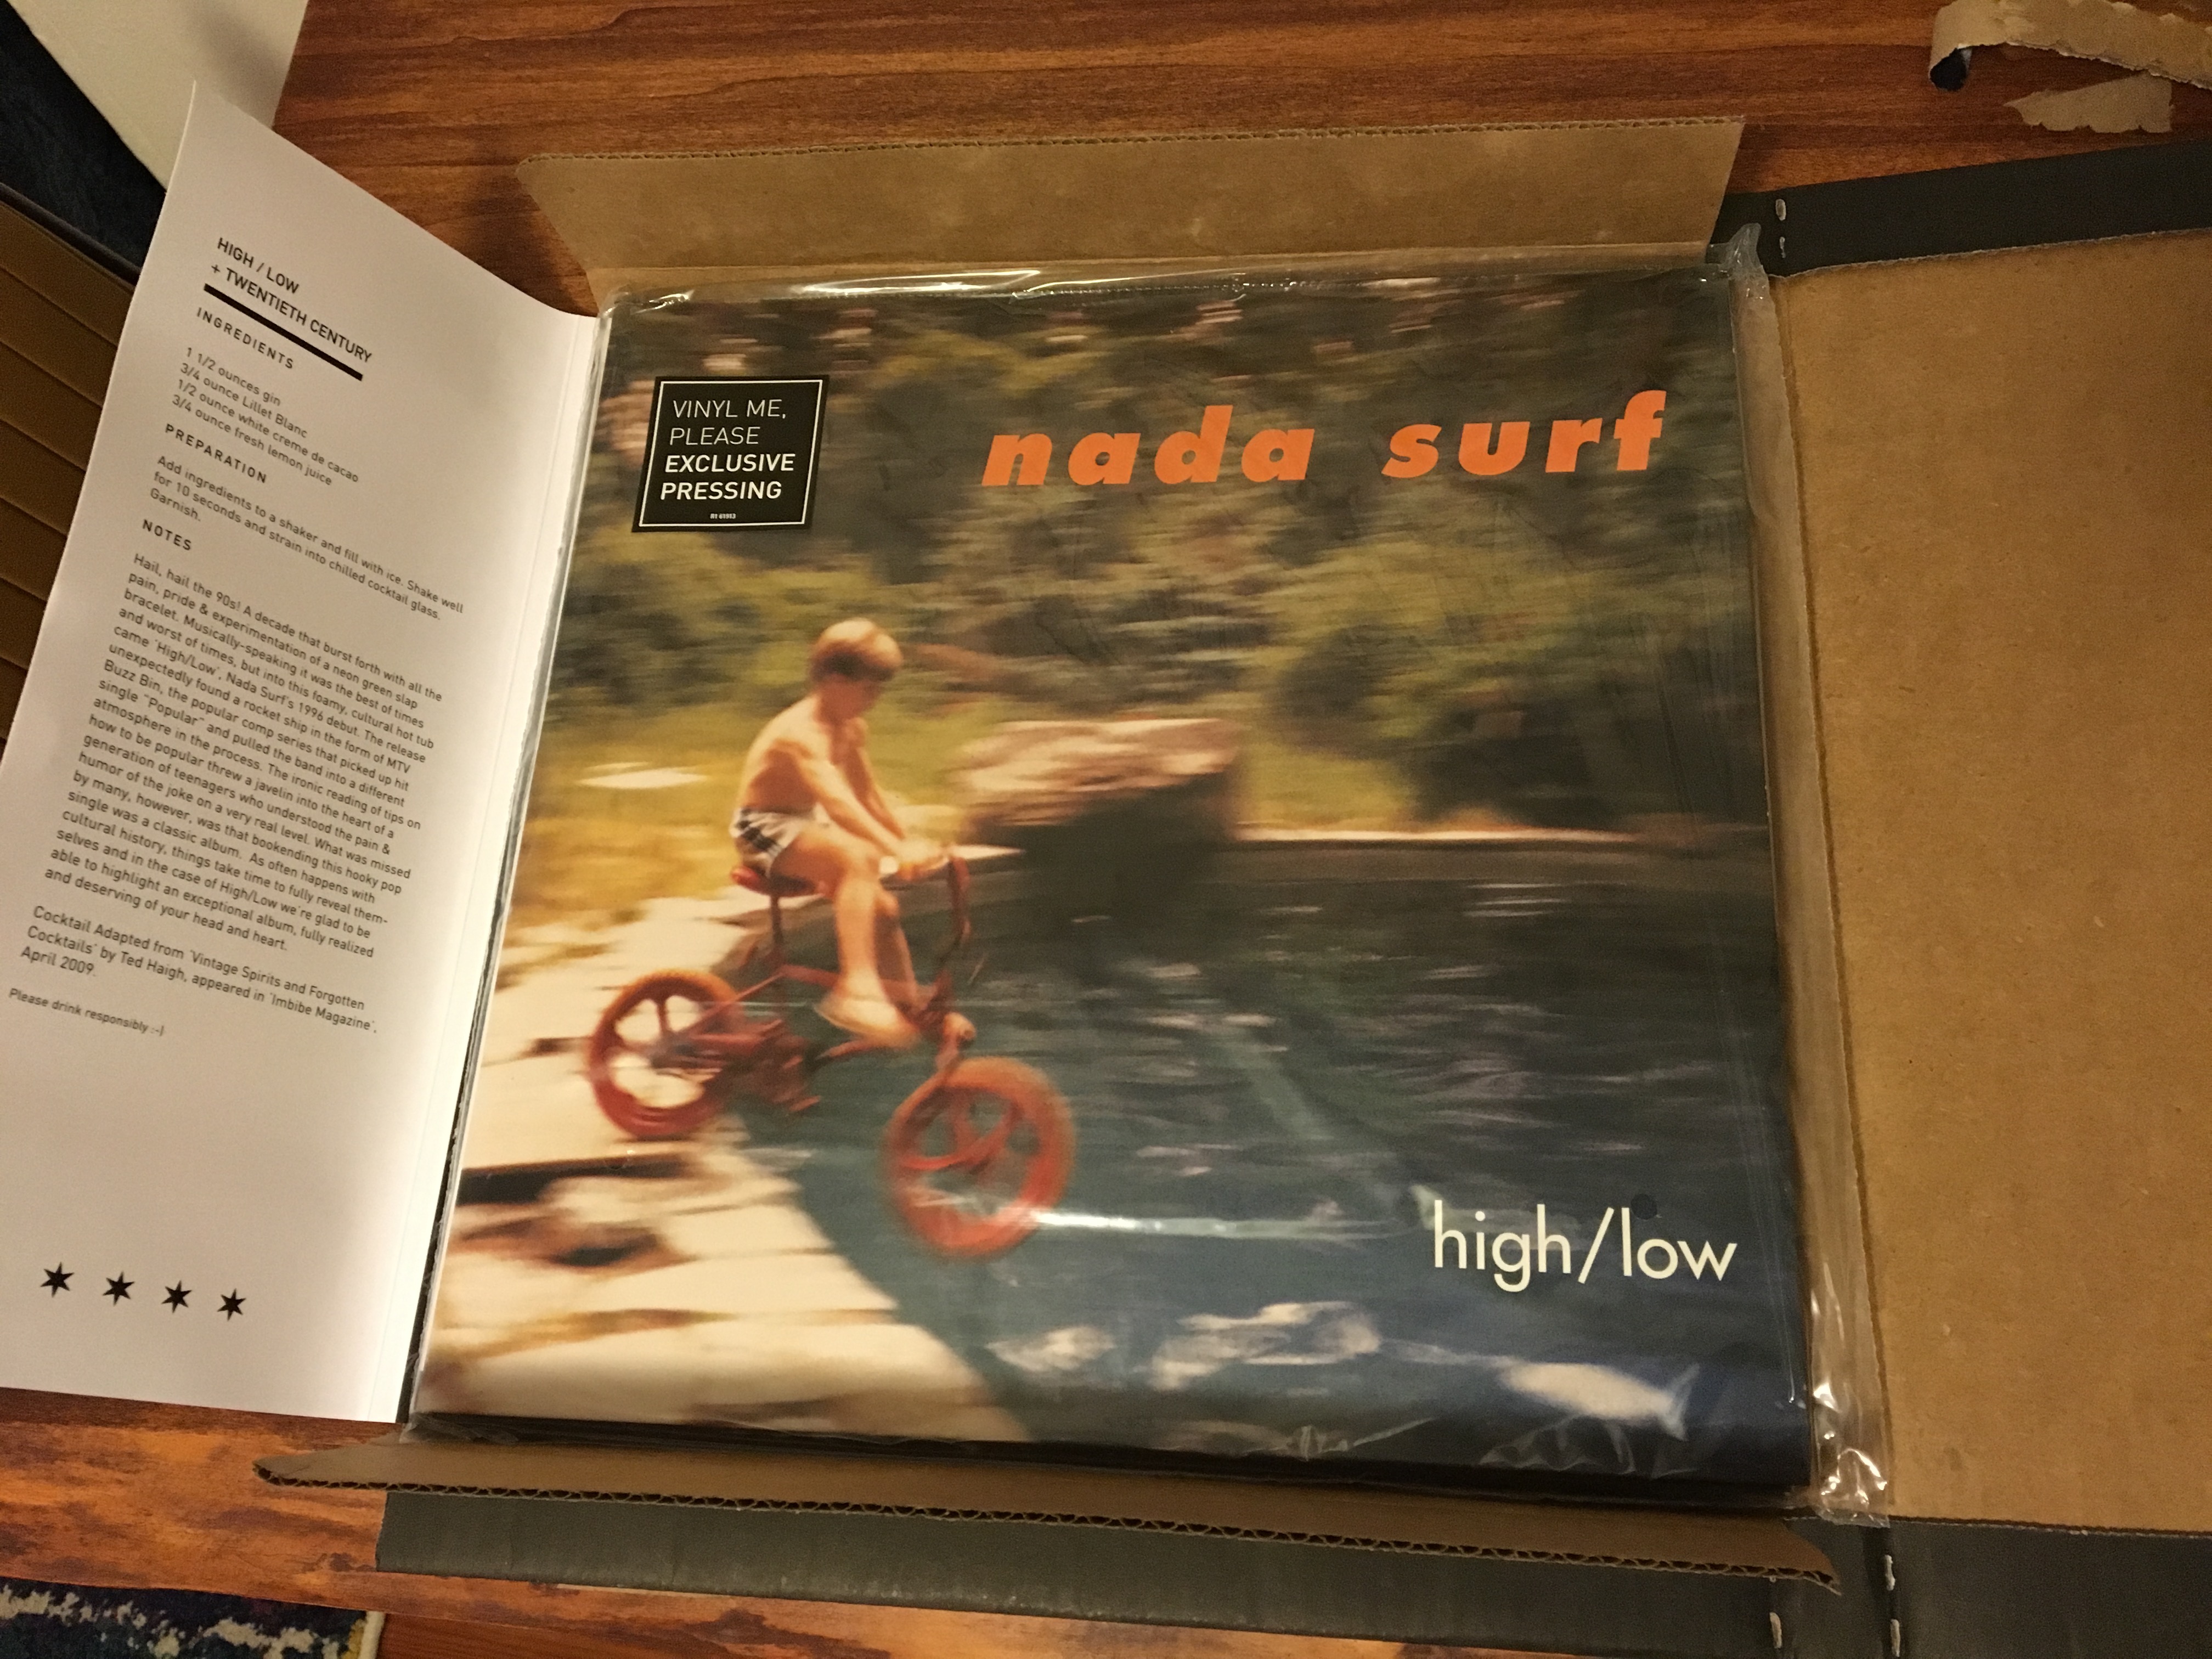 Nada surf, high/low, exclusive pressing, vinyl me please